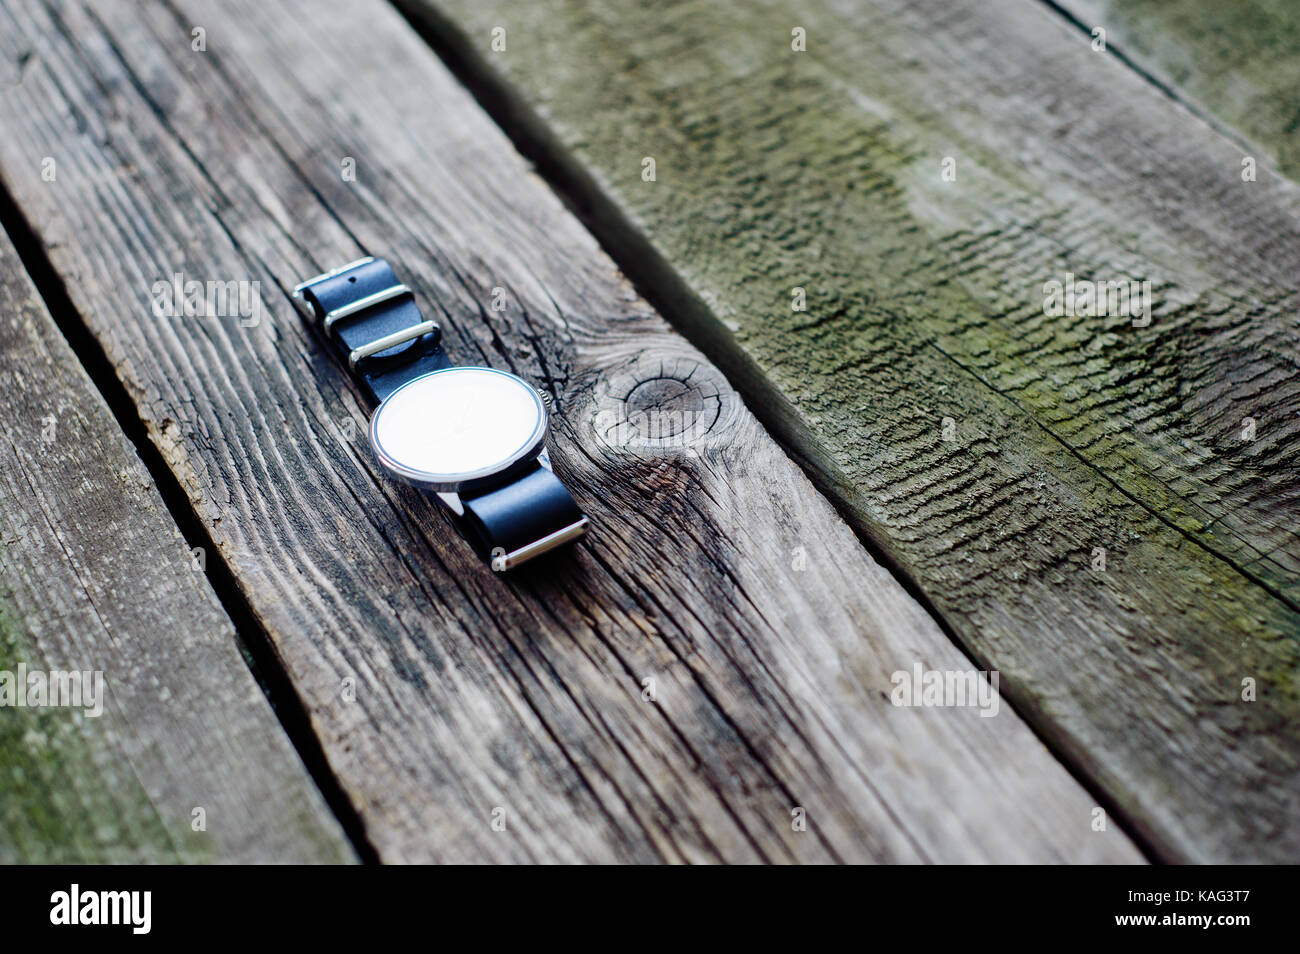 stylish watch on the vintage wooden floor Stock Photo